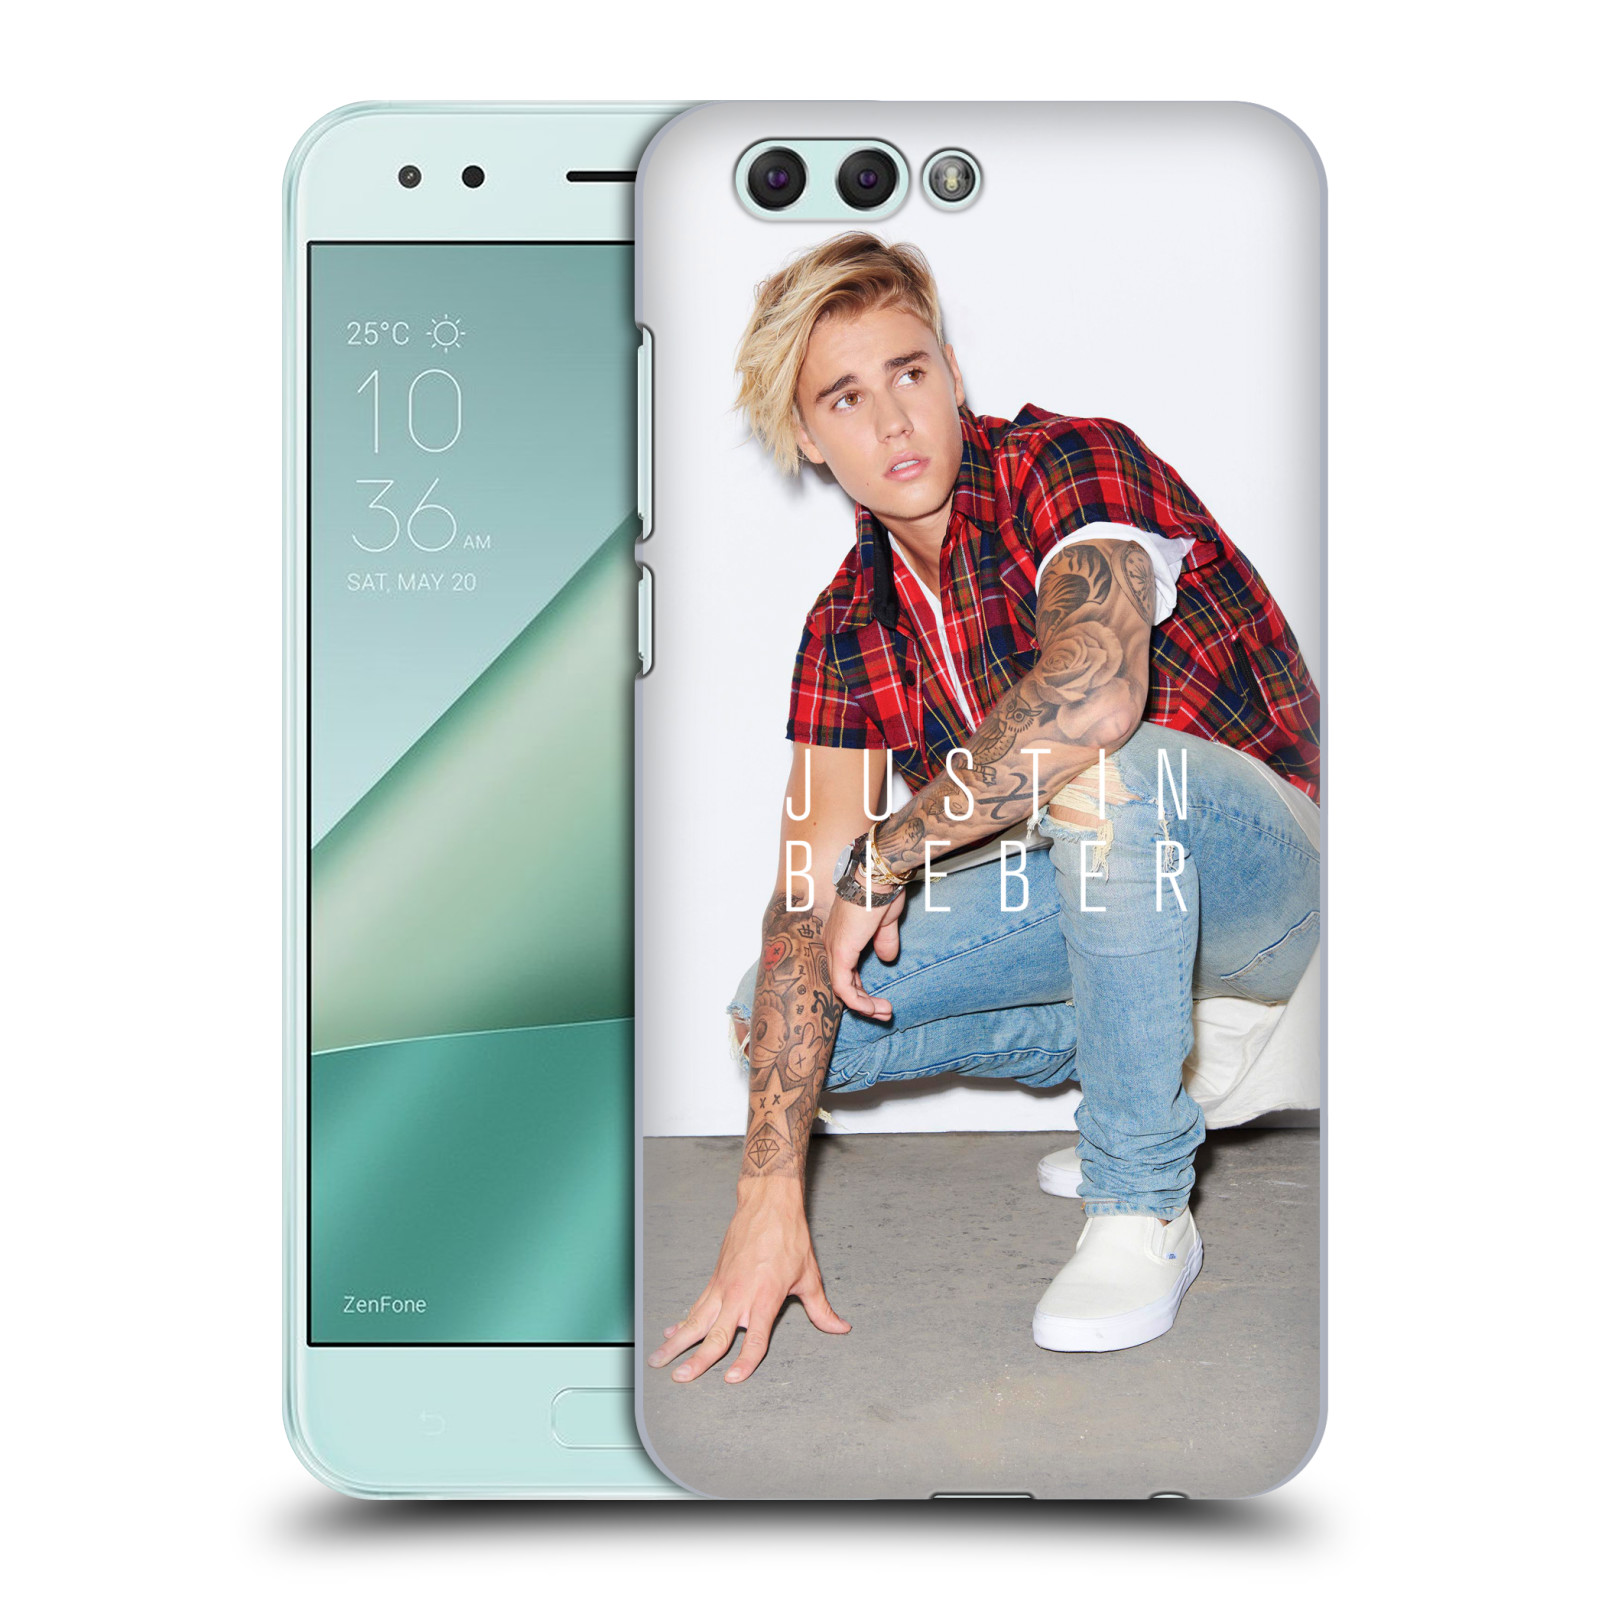 HEAD CASE plastový obal na mobil Asus Zenfone 4 ZE554KL Justin Bieber foto Purpose tour kalendář